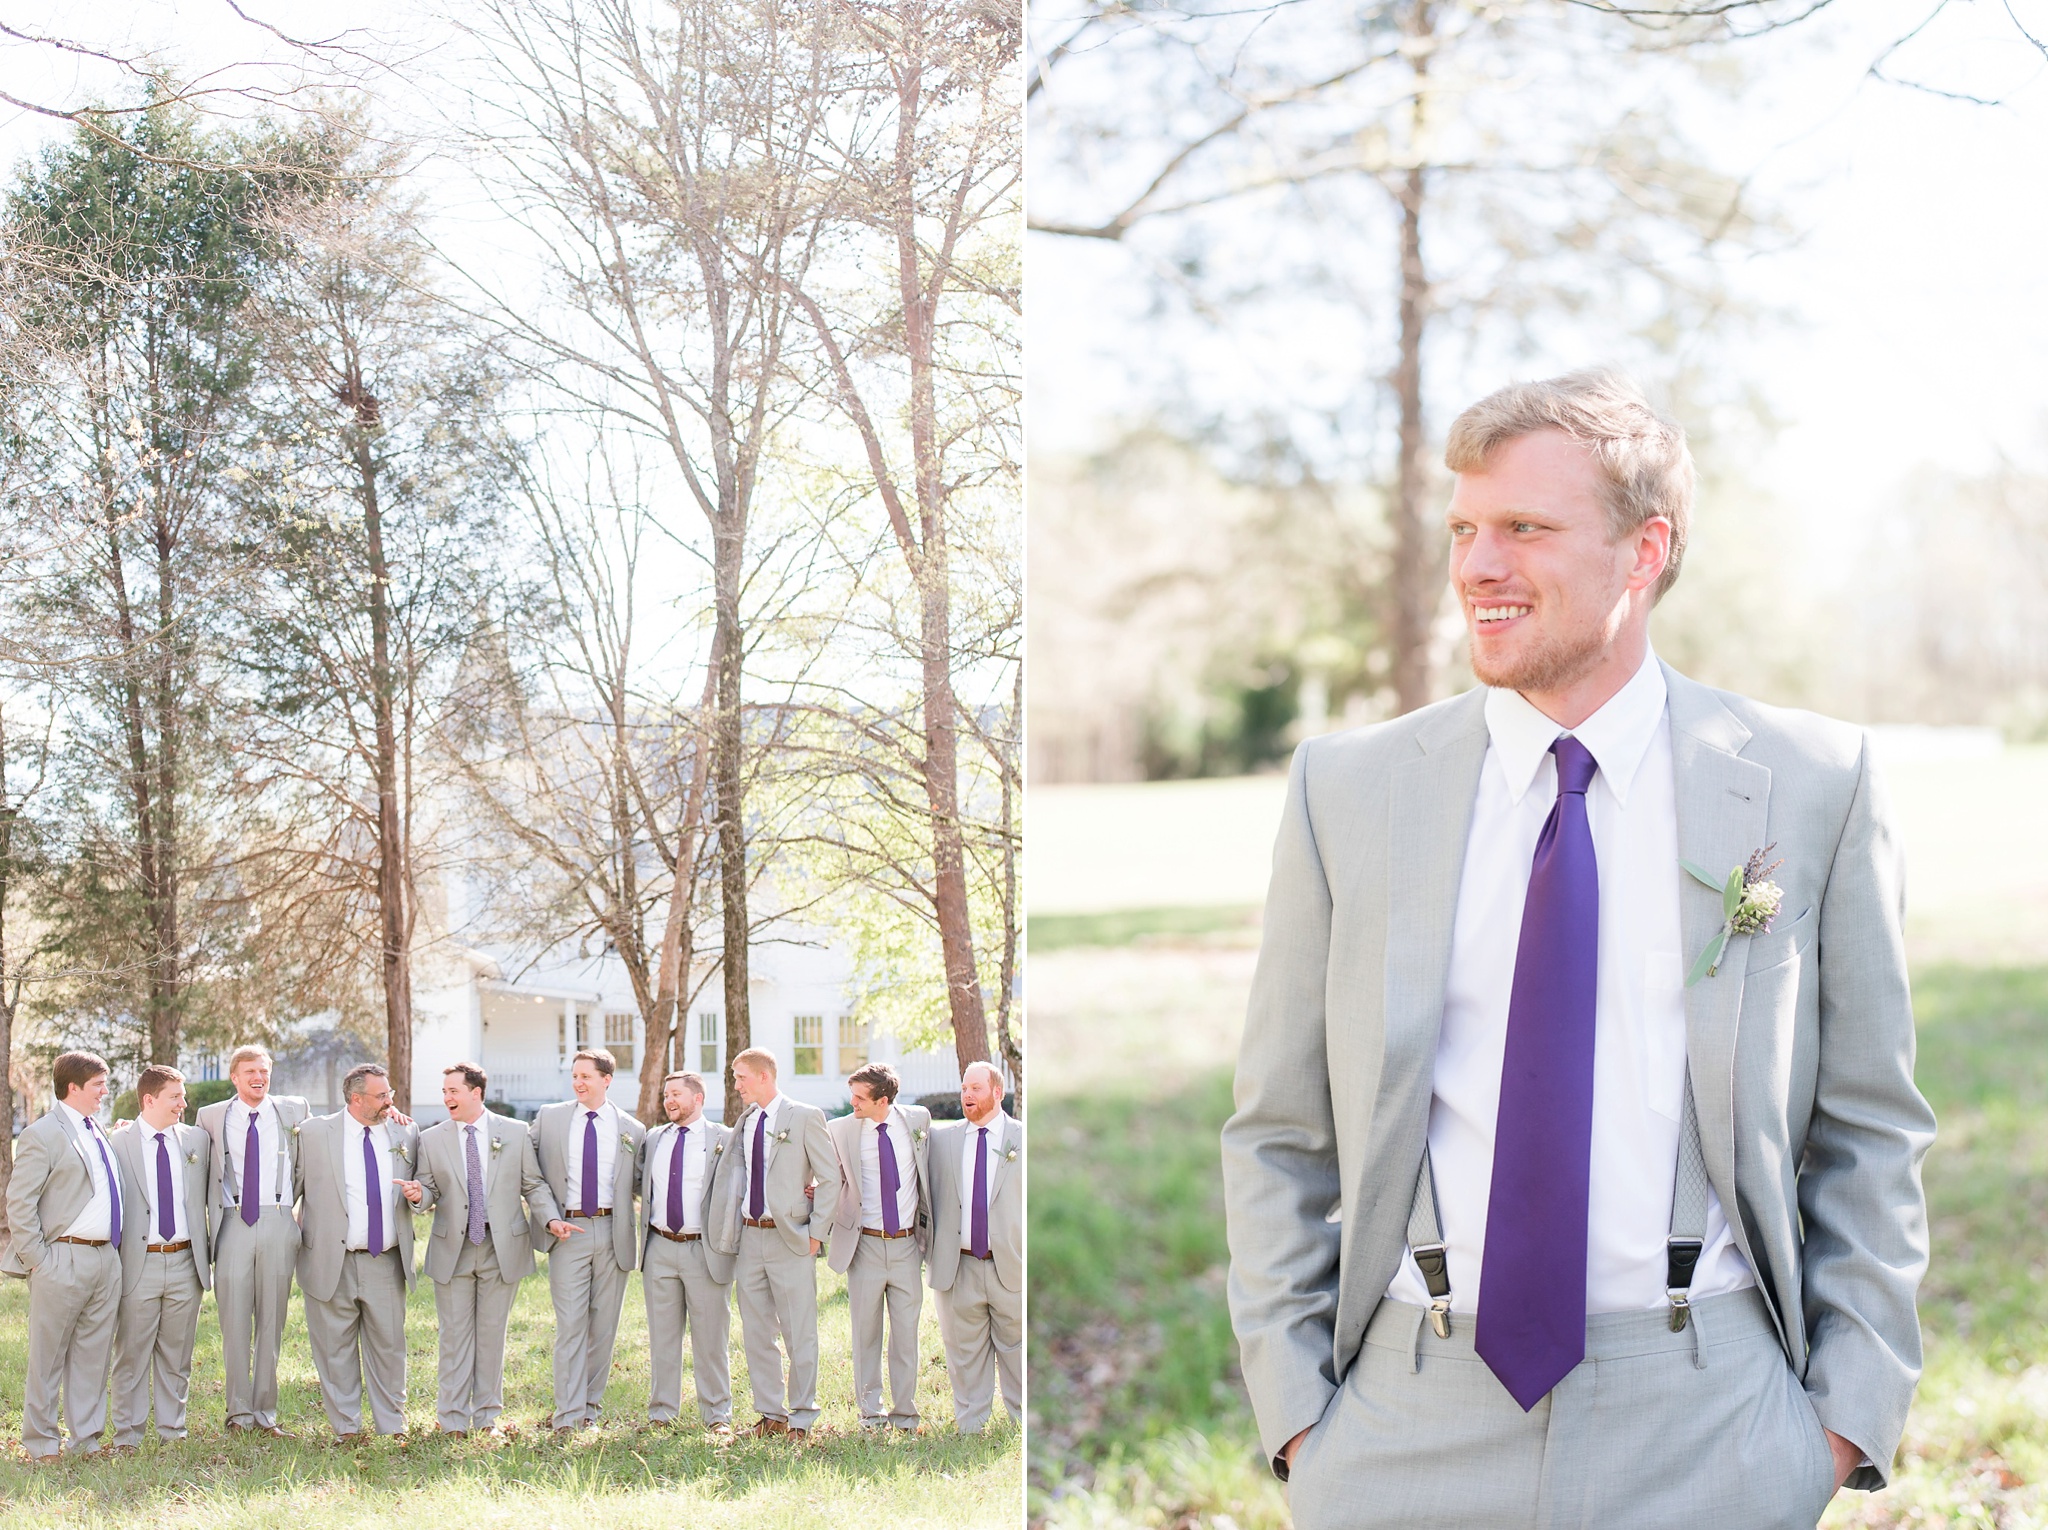 Lavendar Sonnet House Spring Wedding | Birmingham Alabama Wedding Photographers_0043.jpg